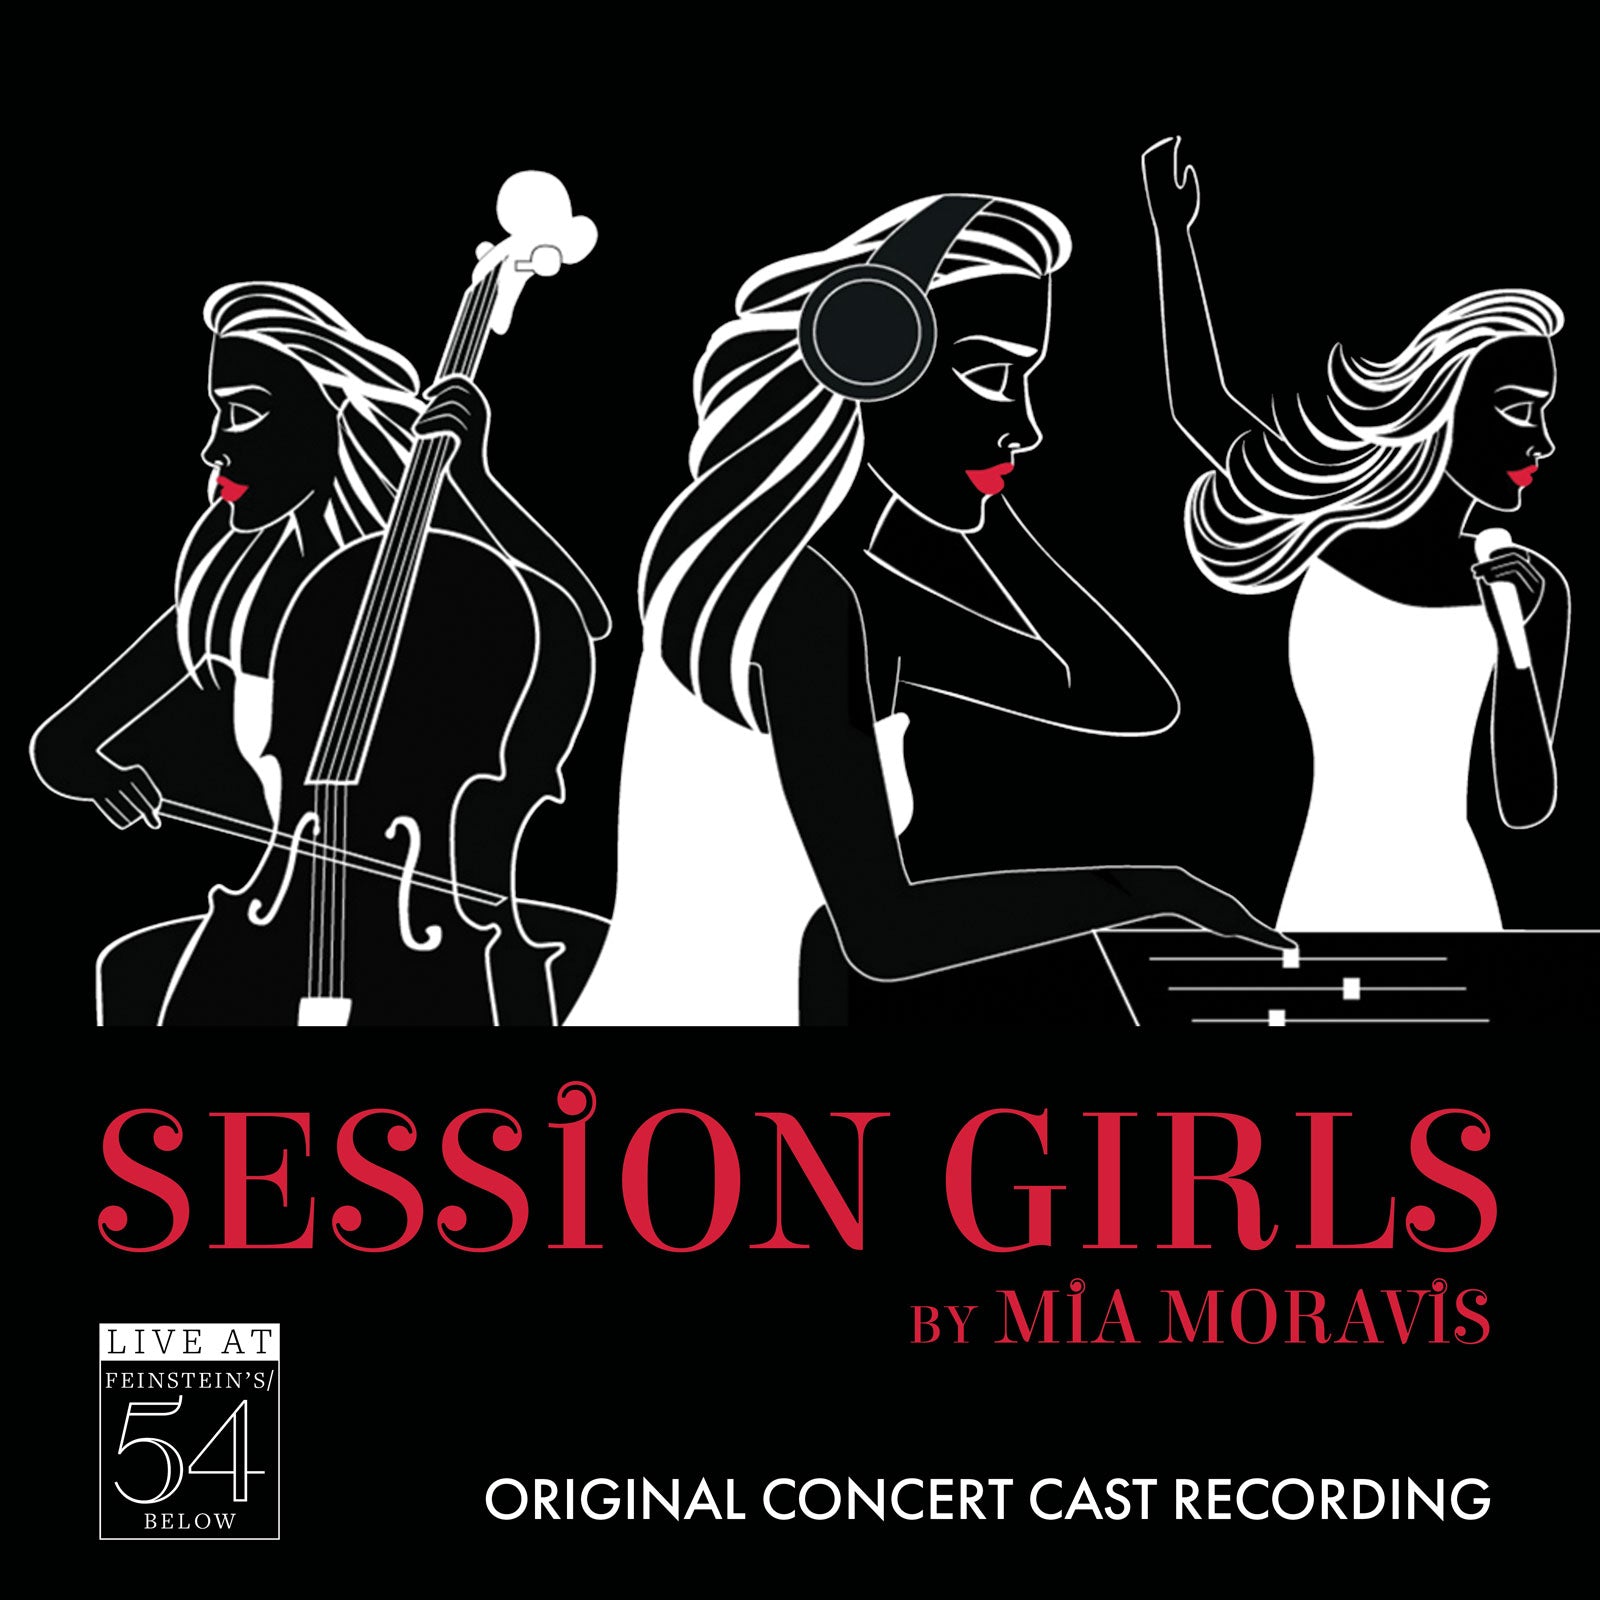 Session Girls (Original Concert Cast Recording) - Live at Feinstein's / 54 Below [CD]